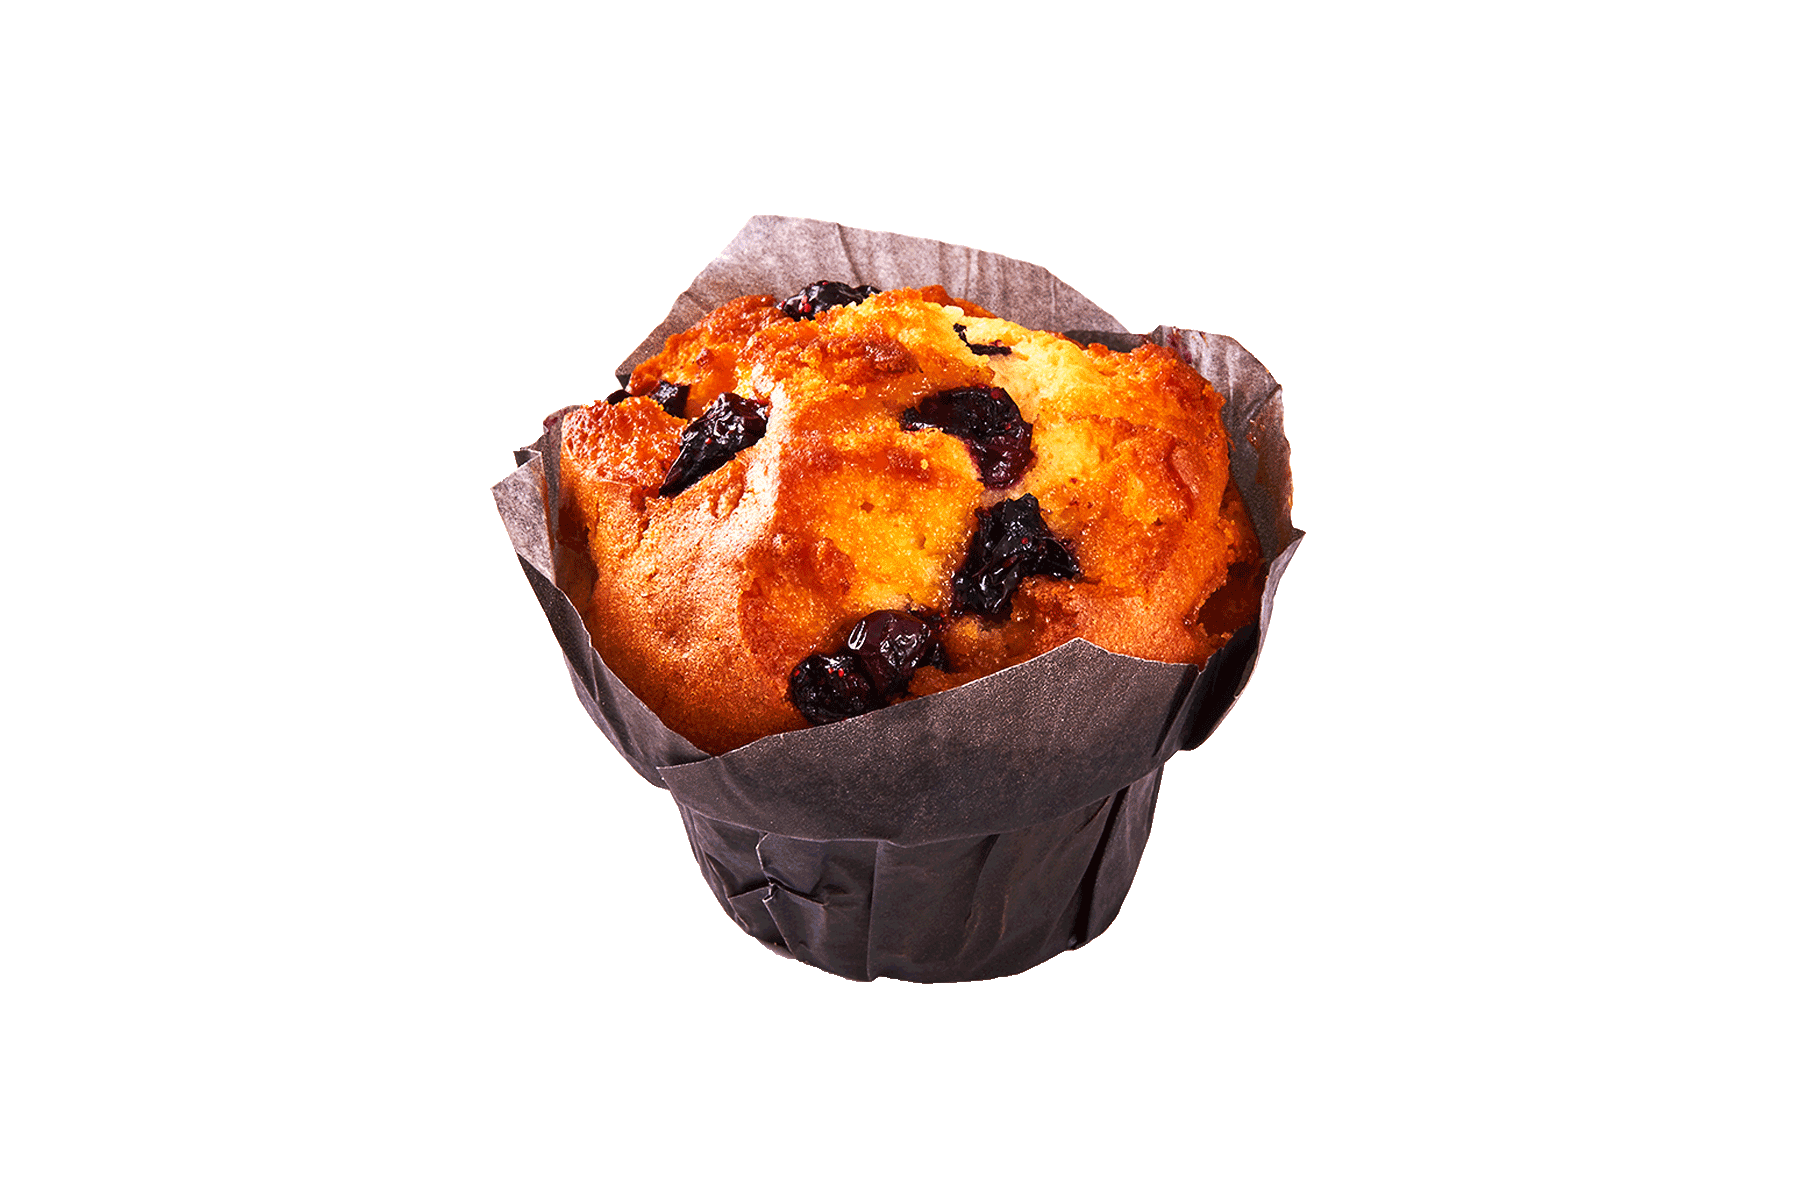 Muffin Blaubeere